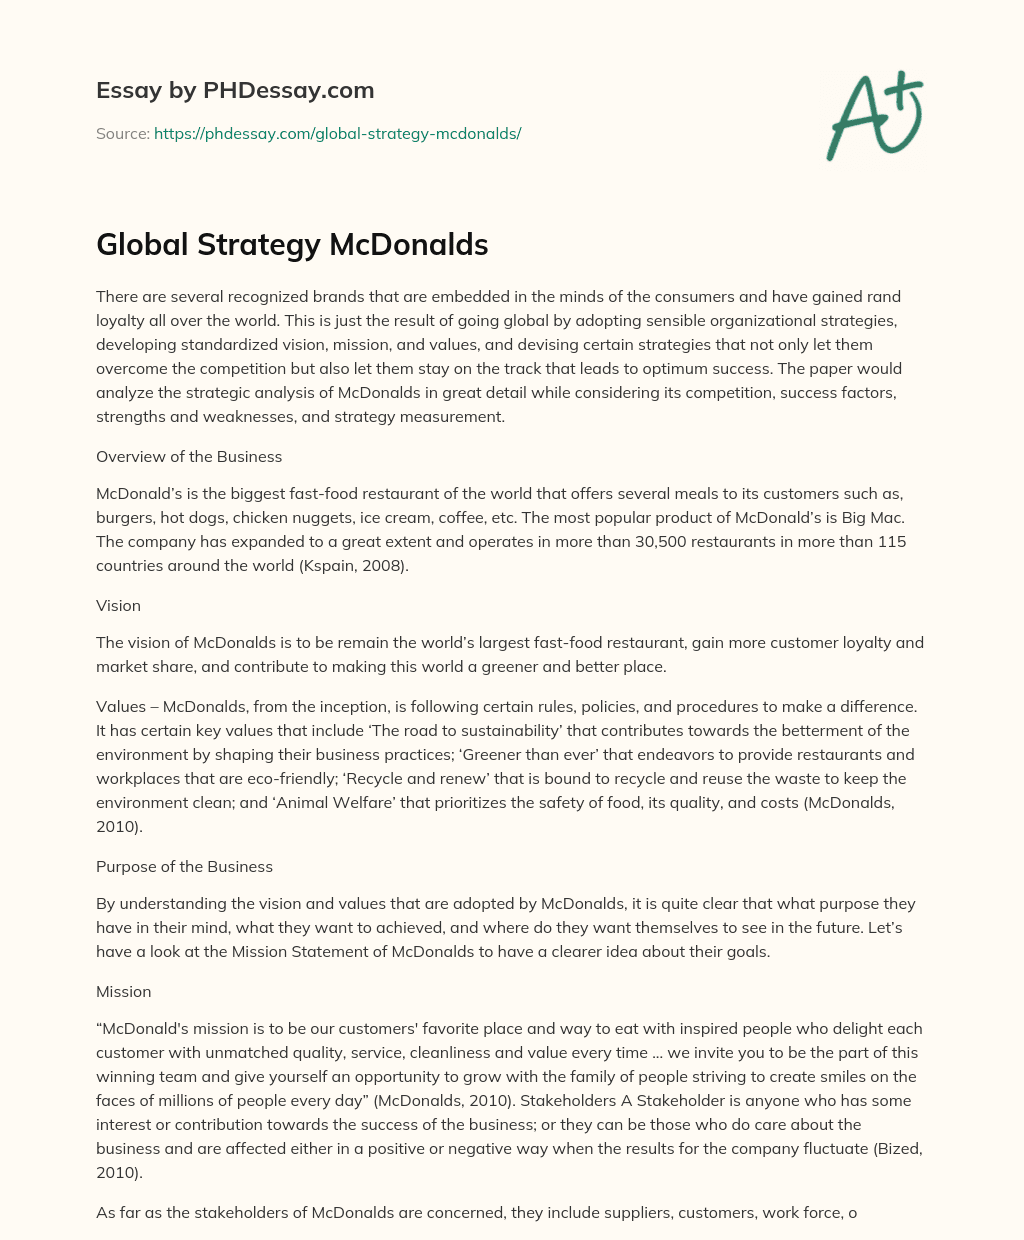 Global Strategy McDonalds essay